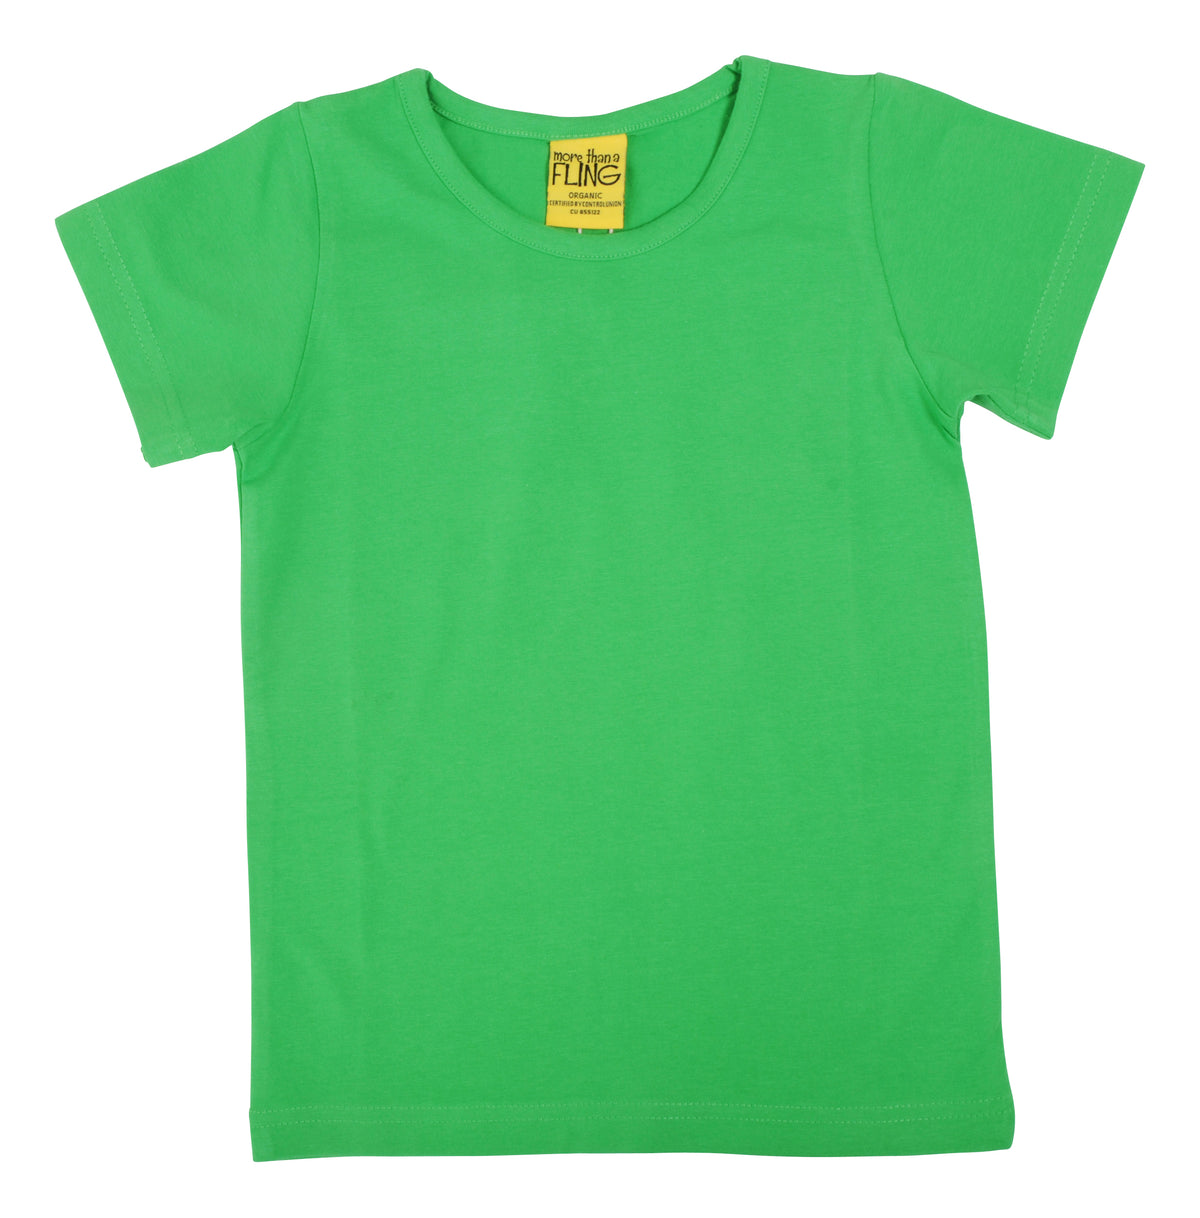 More Than A Fling T Shirt Classic Green